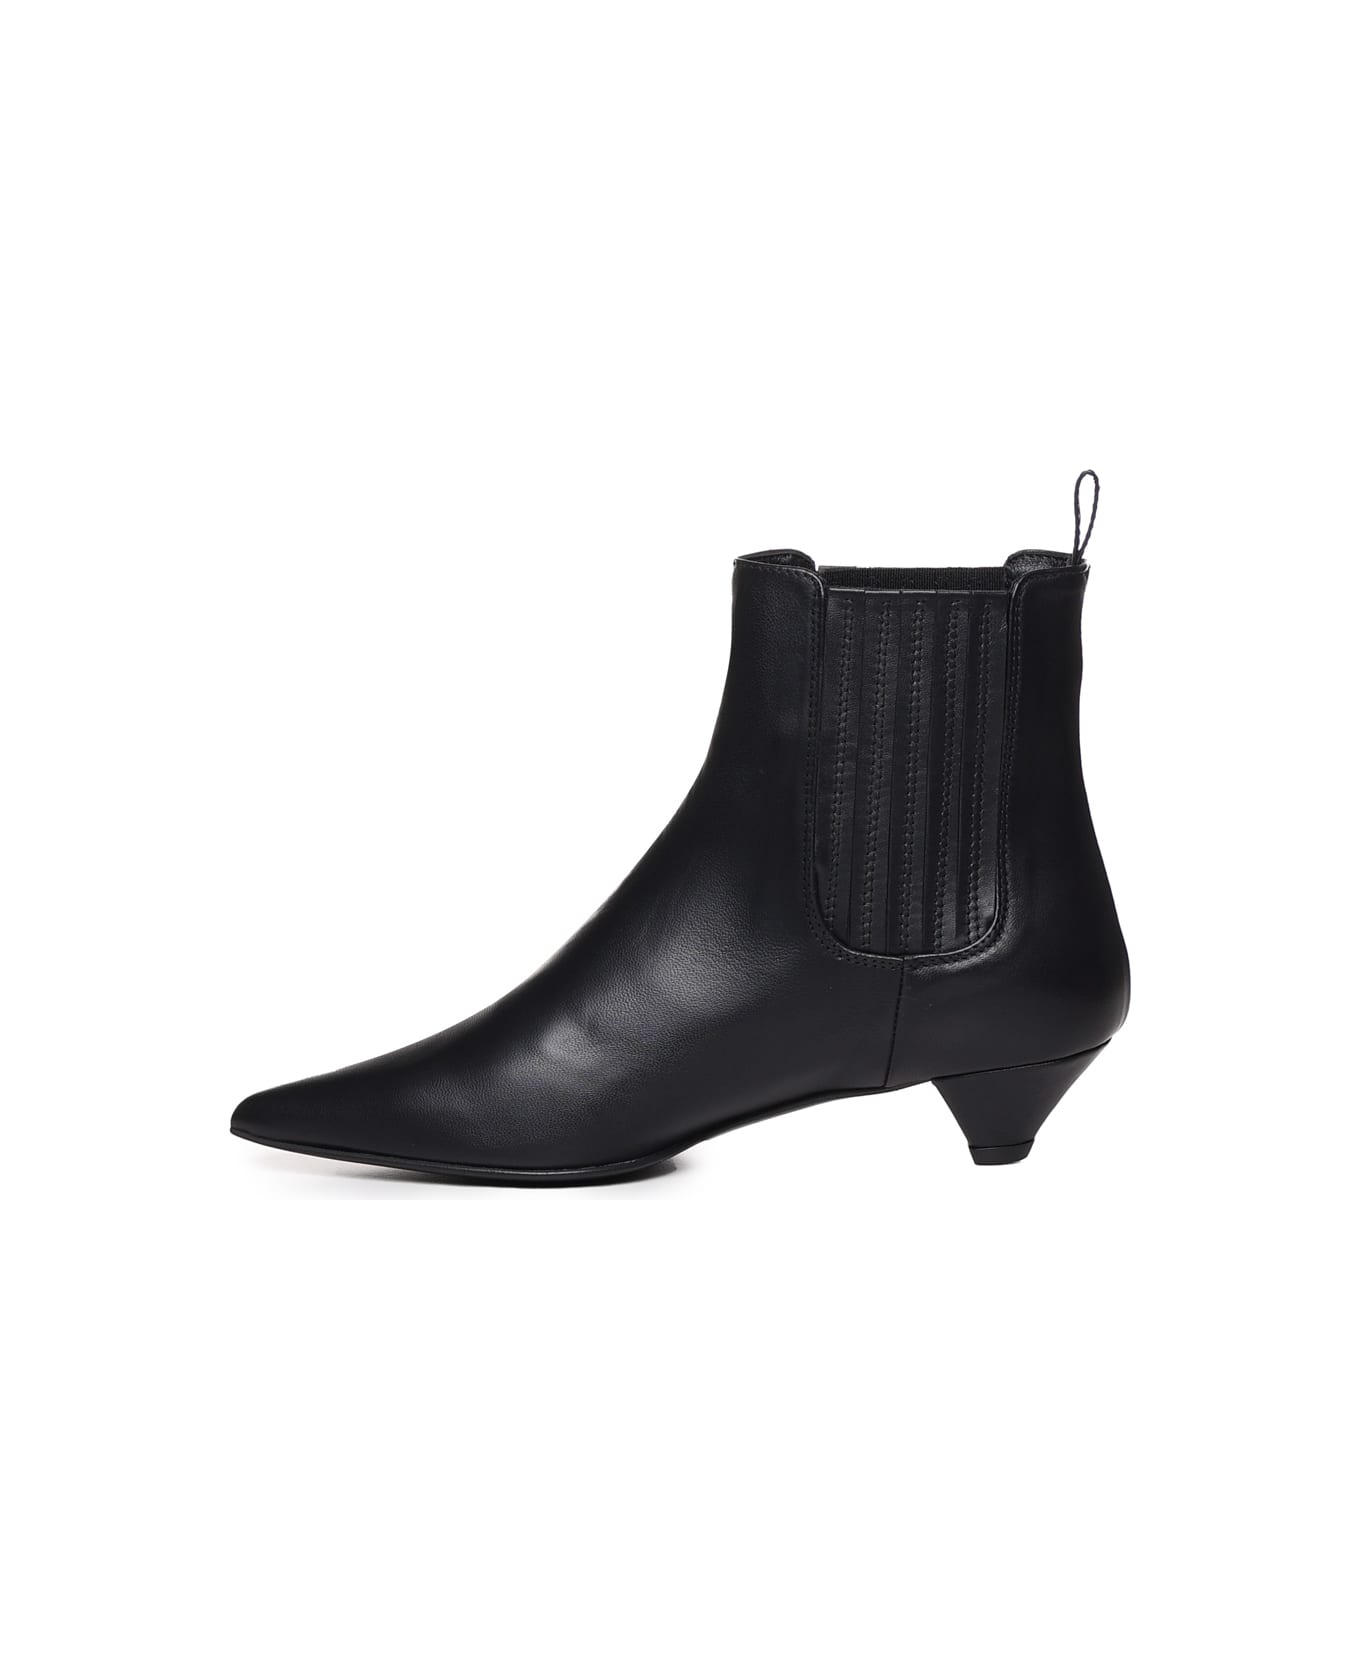 Marc Ellis Leather Ankle Boot - Black